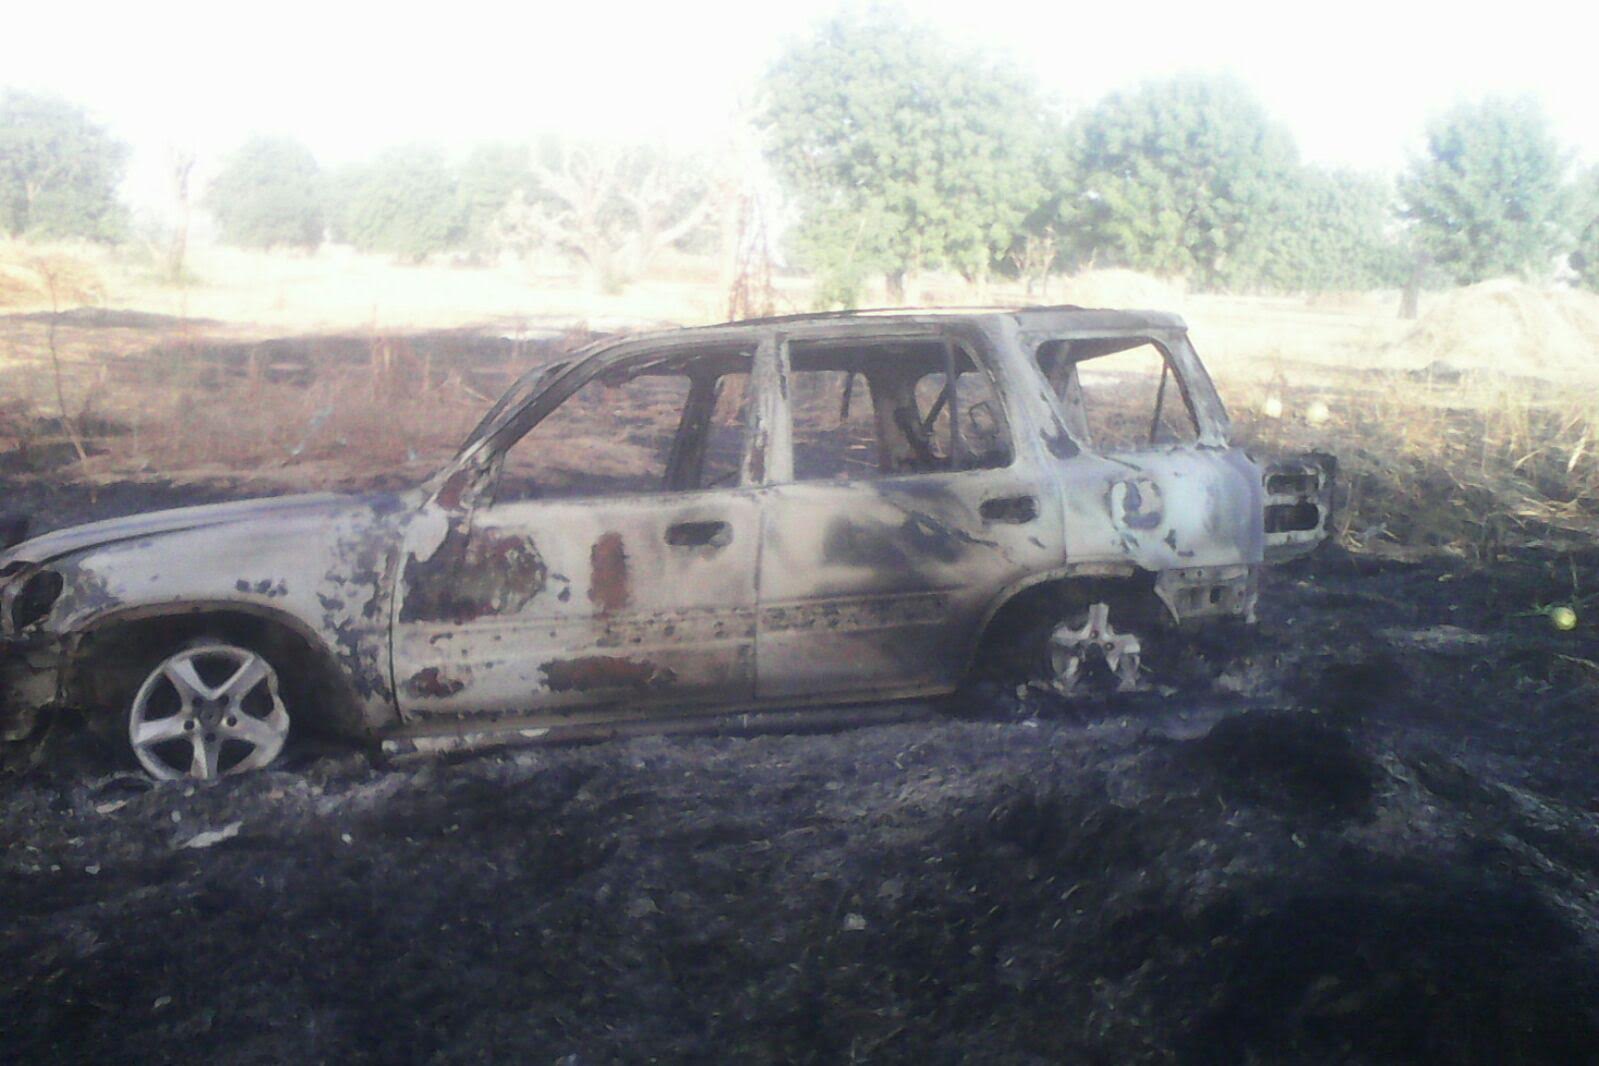 Vehicles burned by Boko Haram in Maiduguri